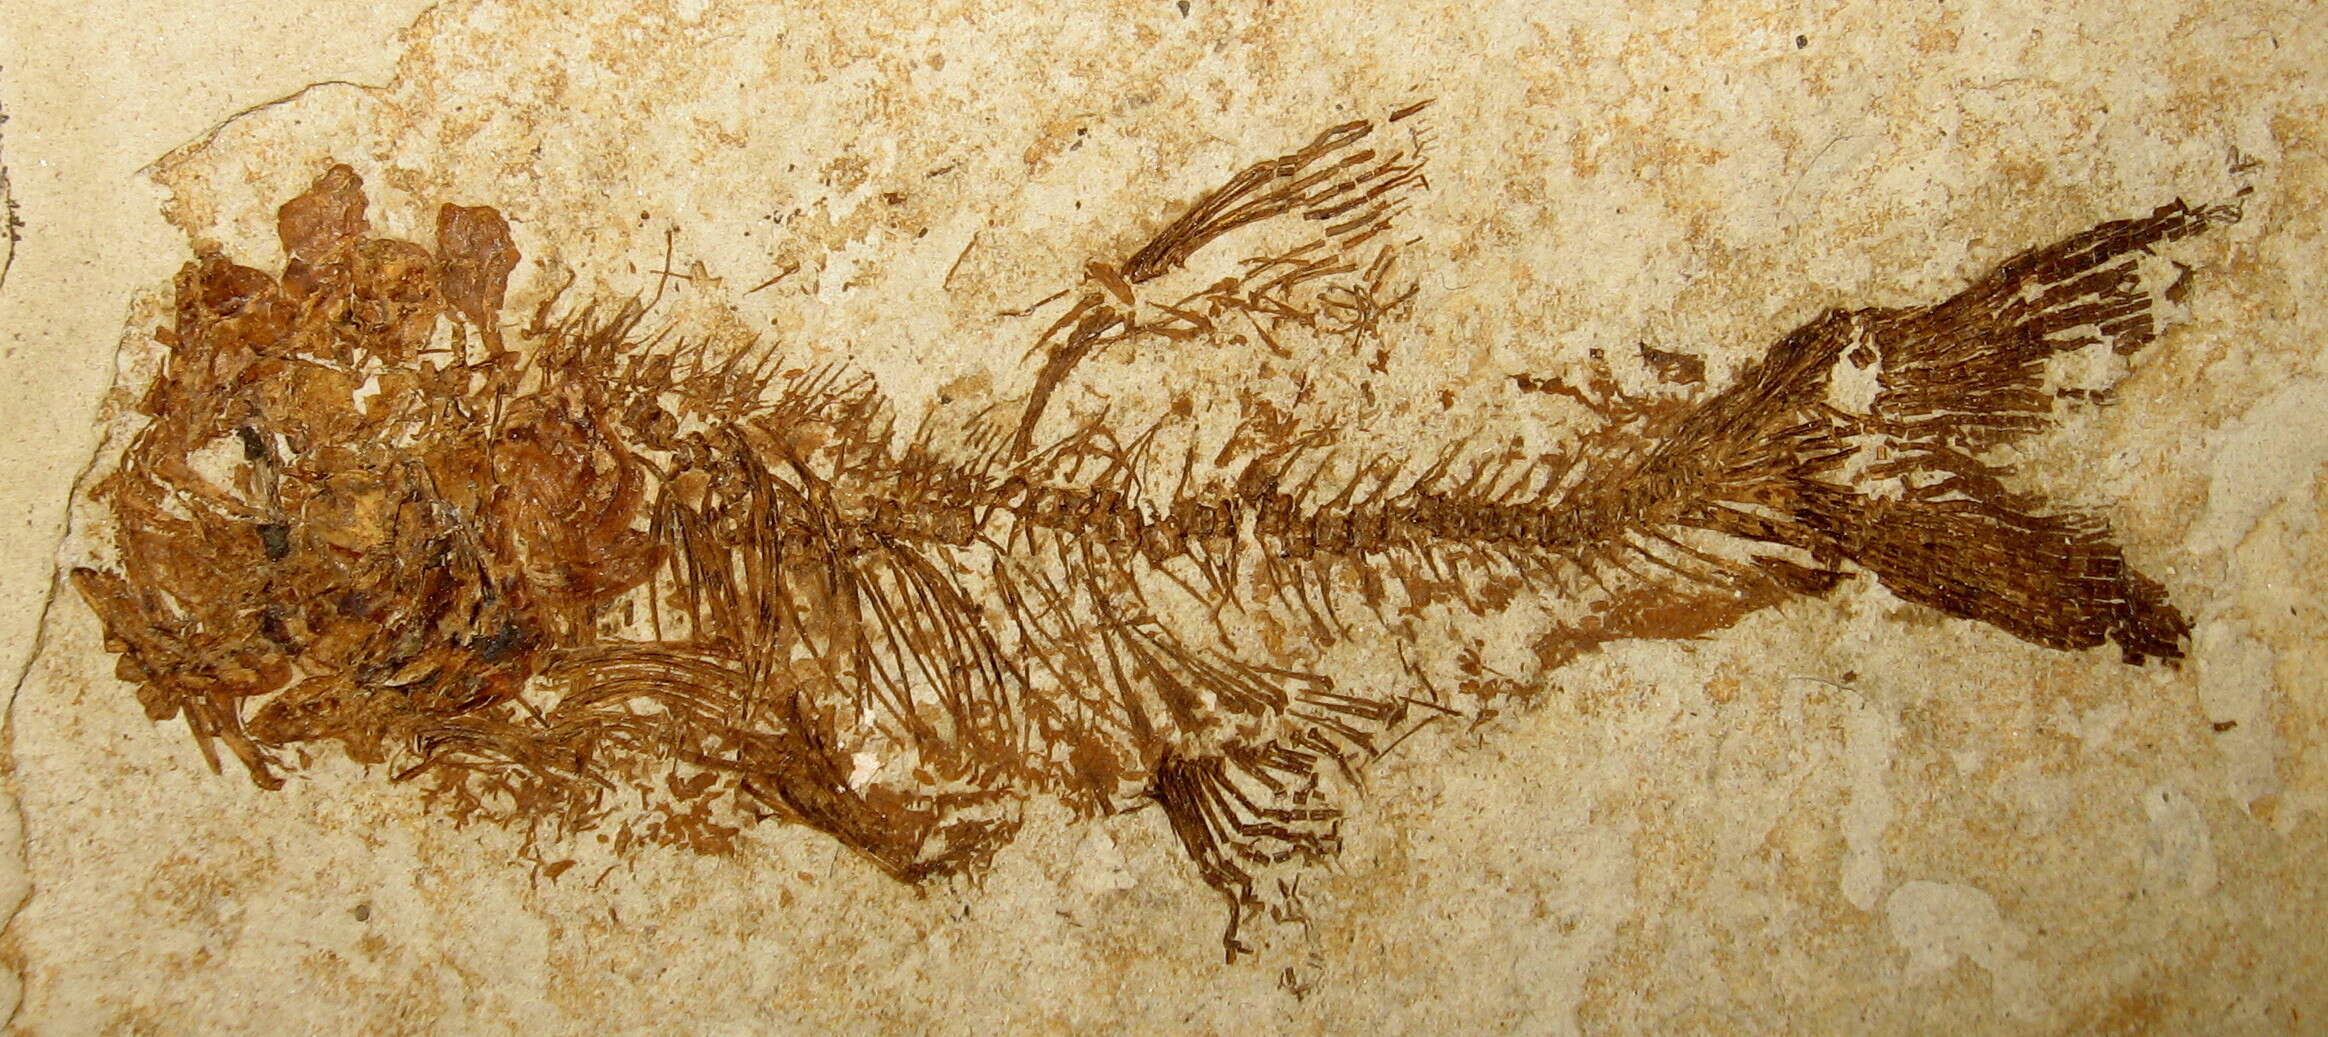 Image of Hiodontiformes